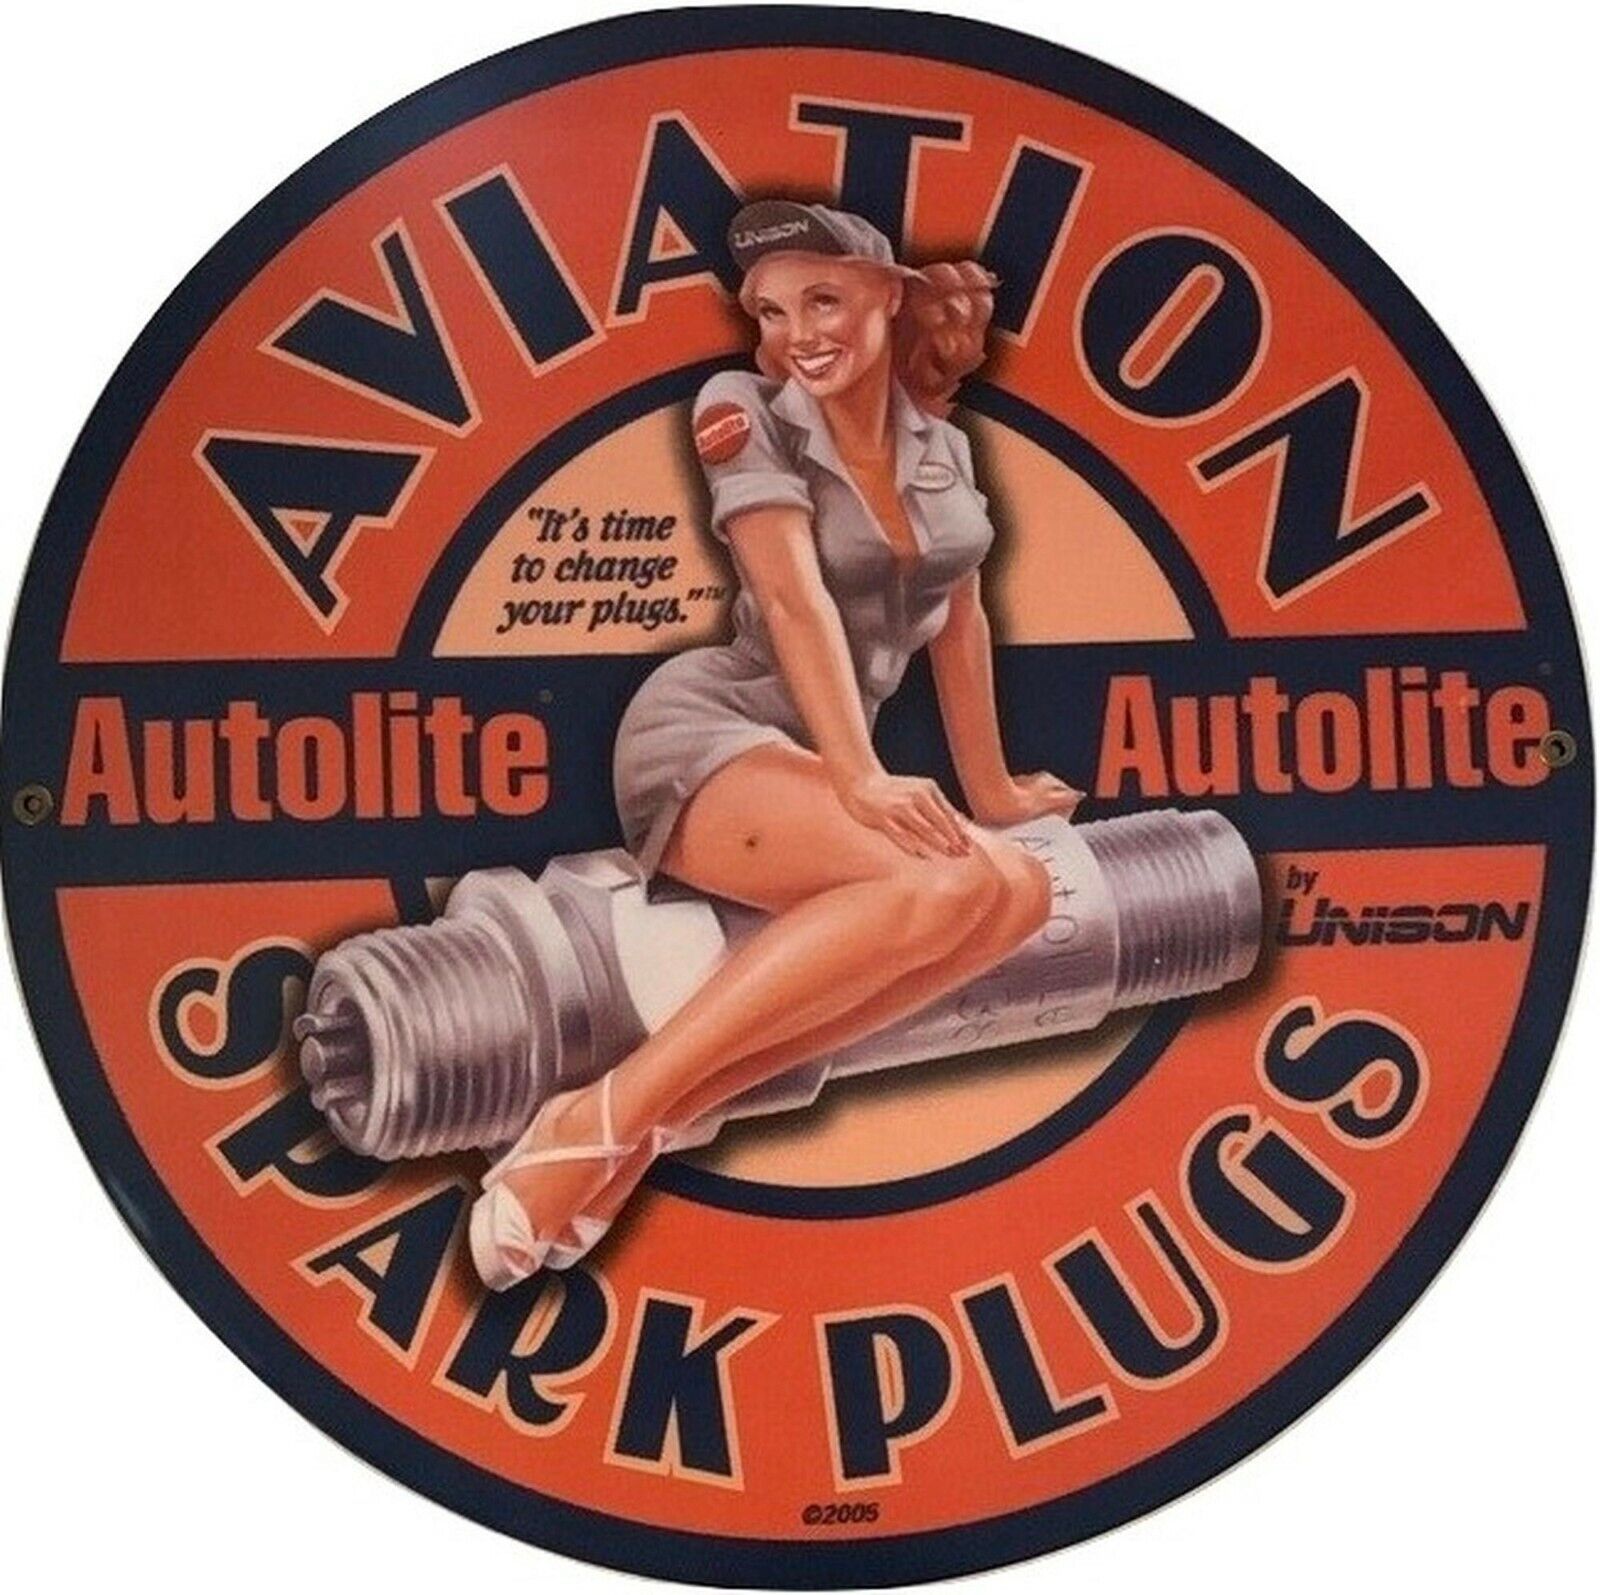 Autolite Aviation Spark Plugs Metal Sign, Vintage Aviation, Pilot Gift  SIG-0500